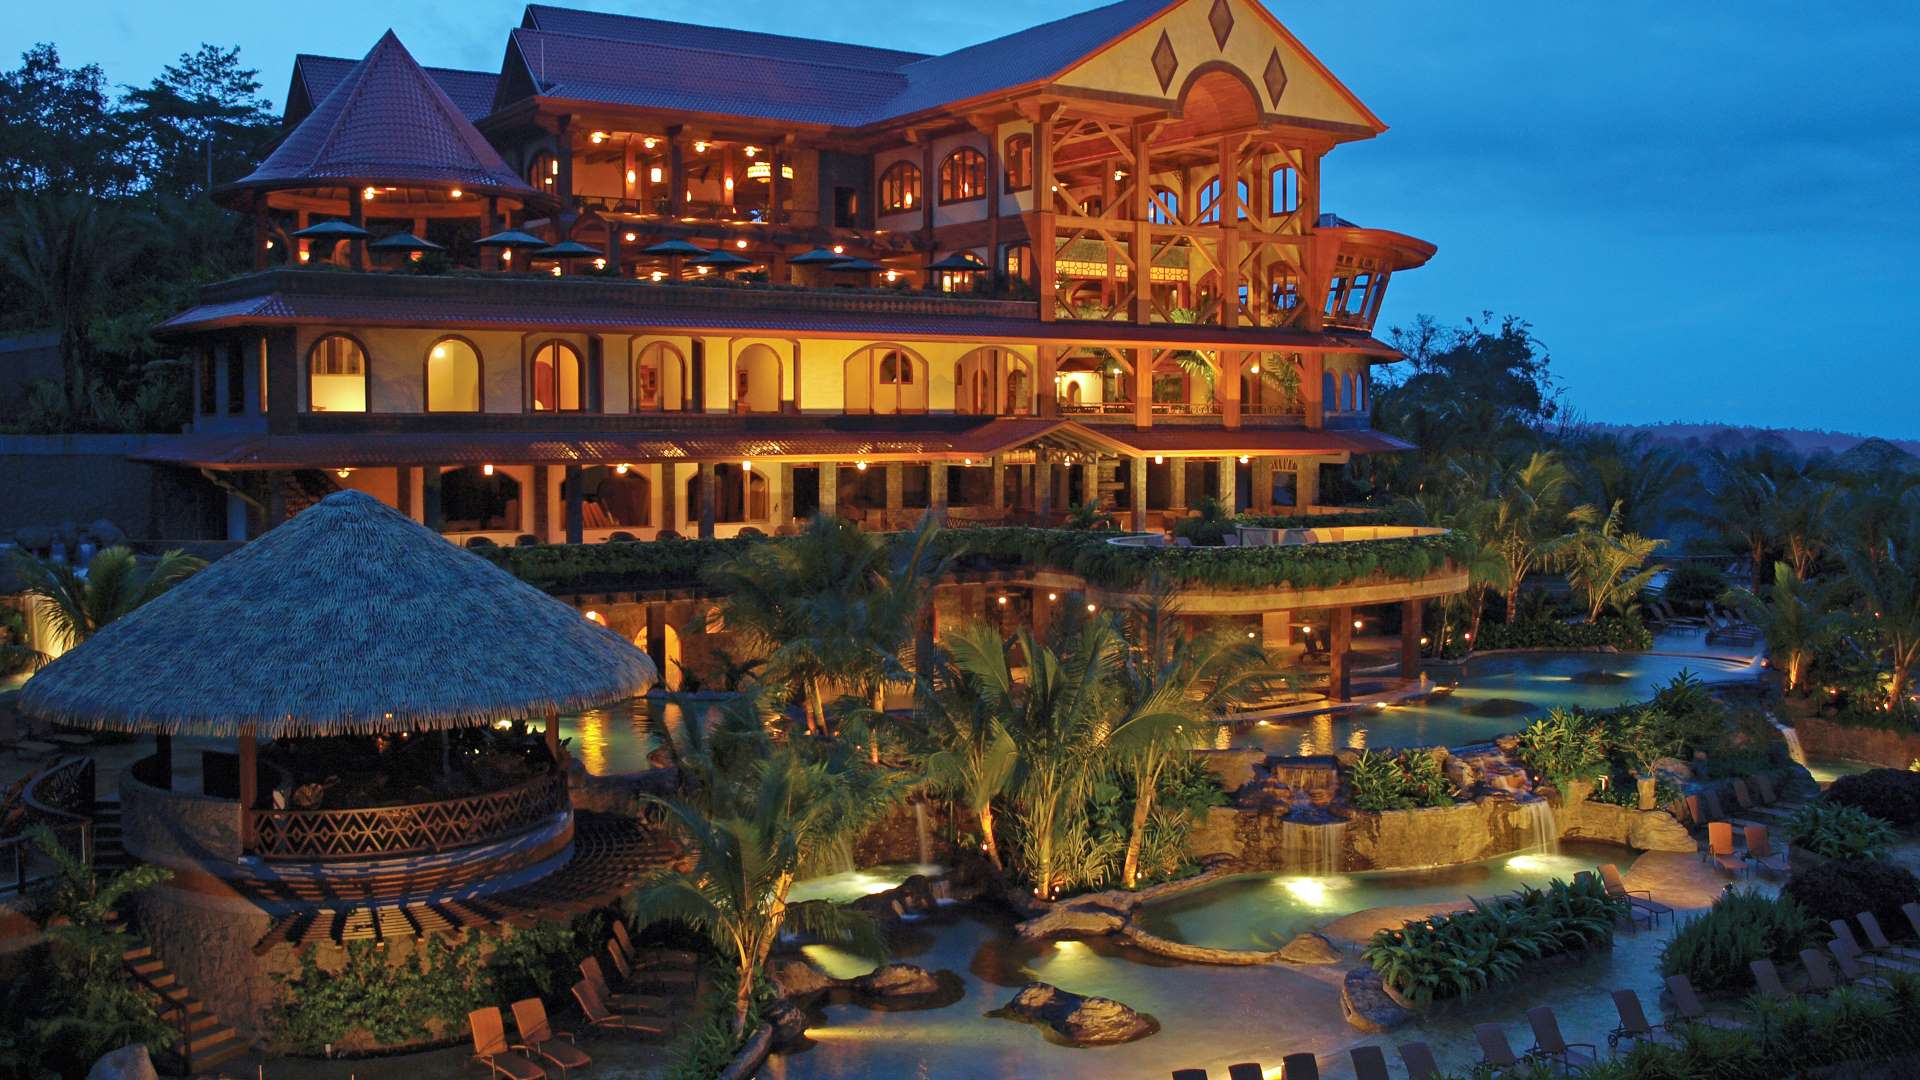 The Springs Resort hotel